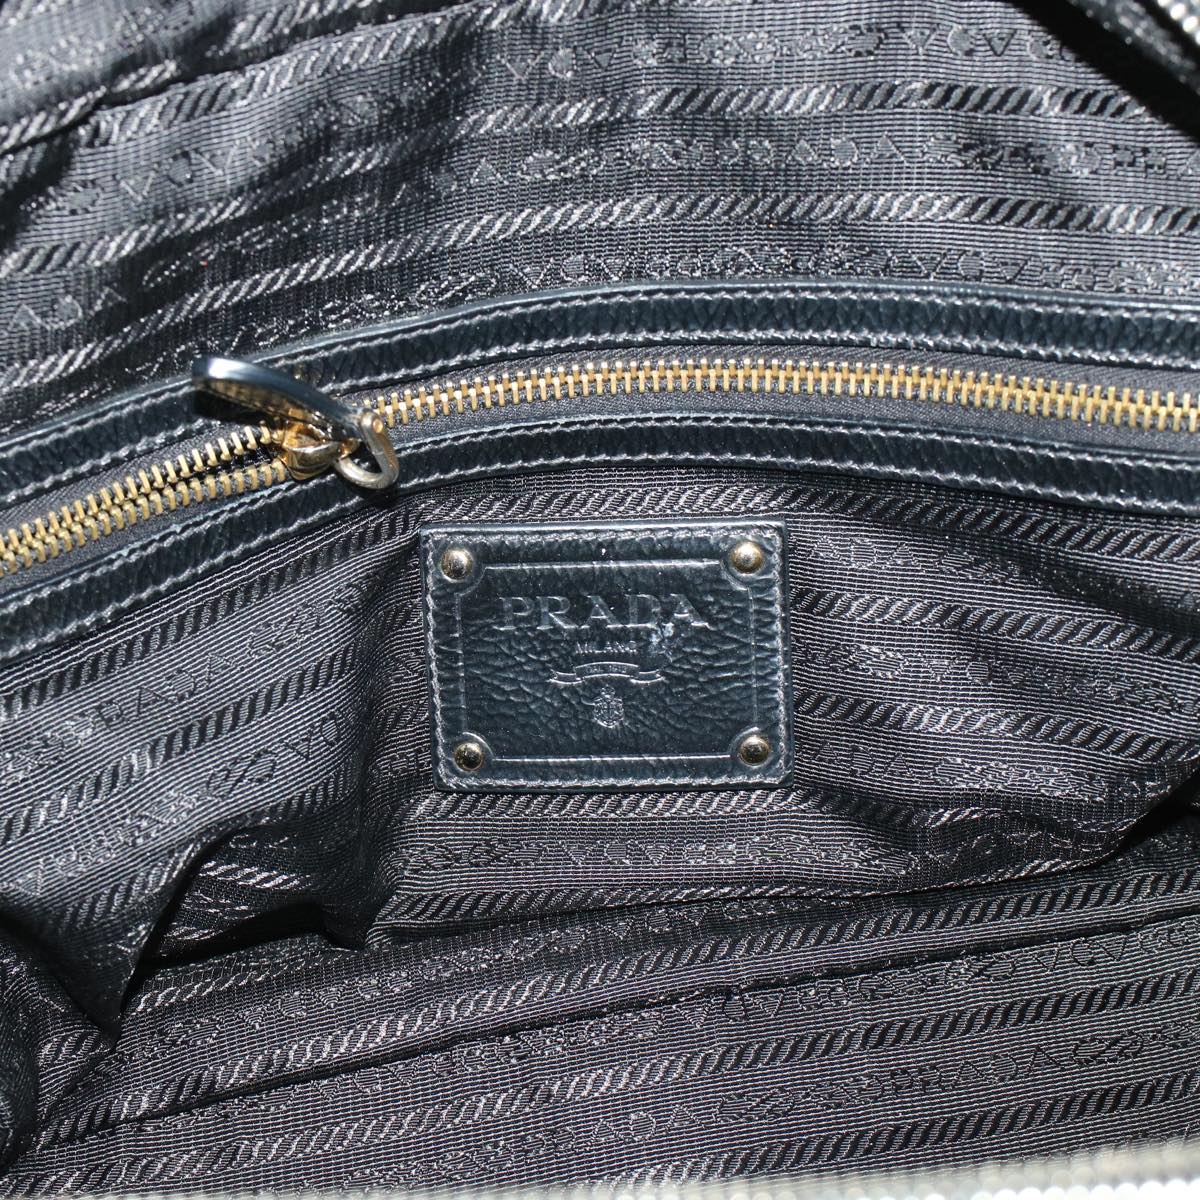 PRADA Shoulder Bag Leather Black Auth 42191